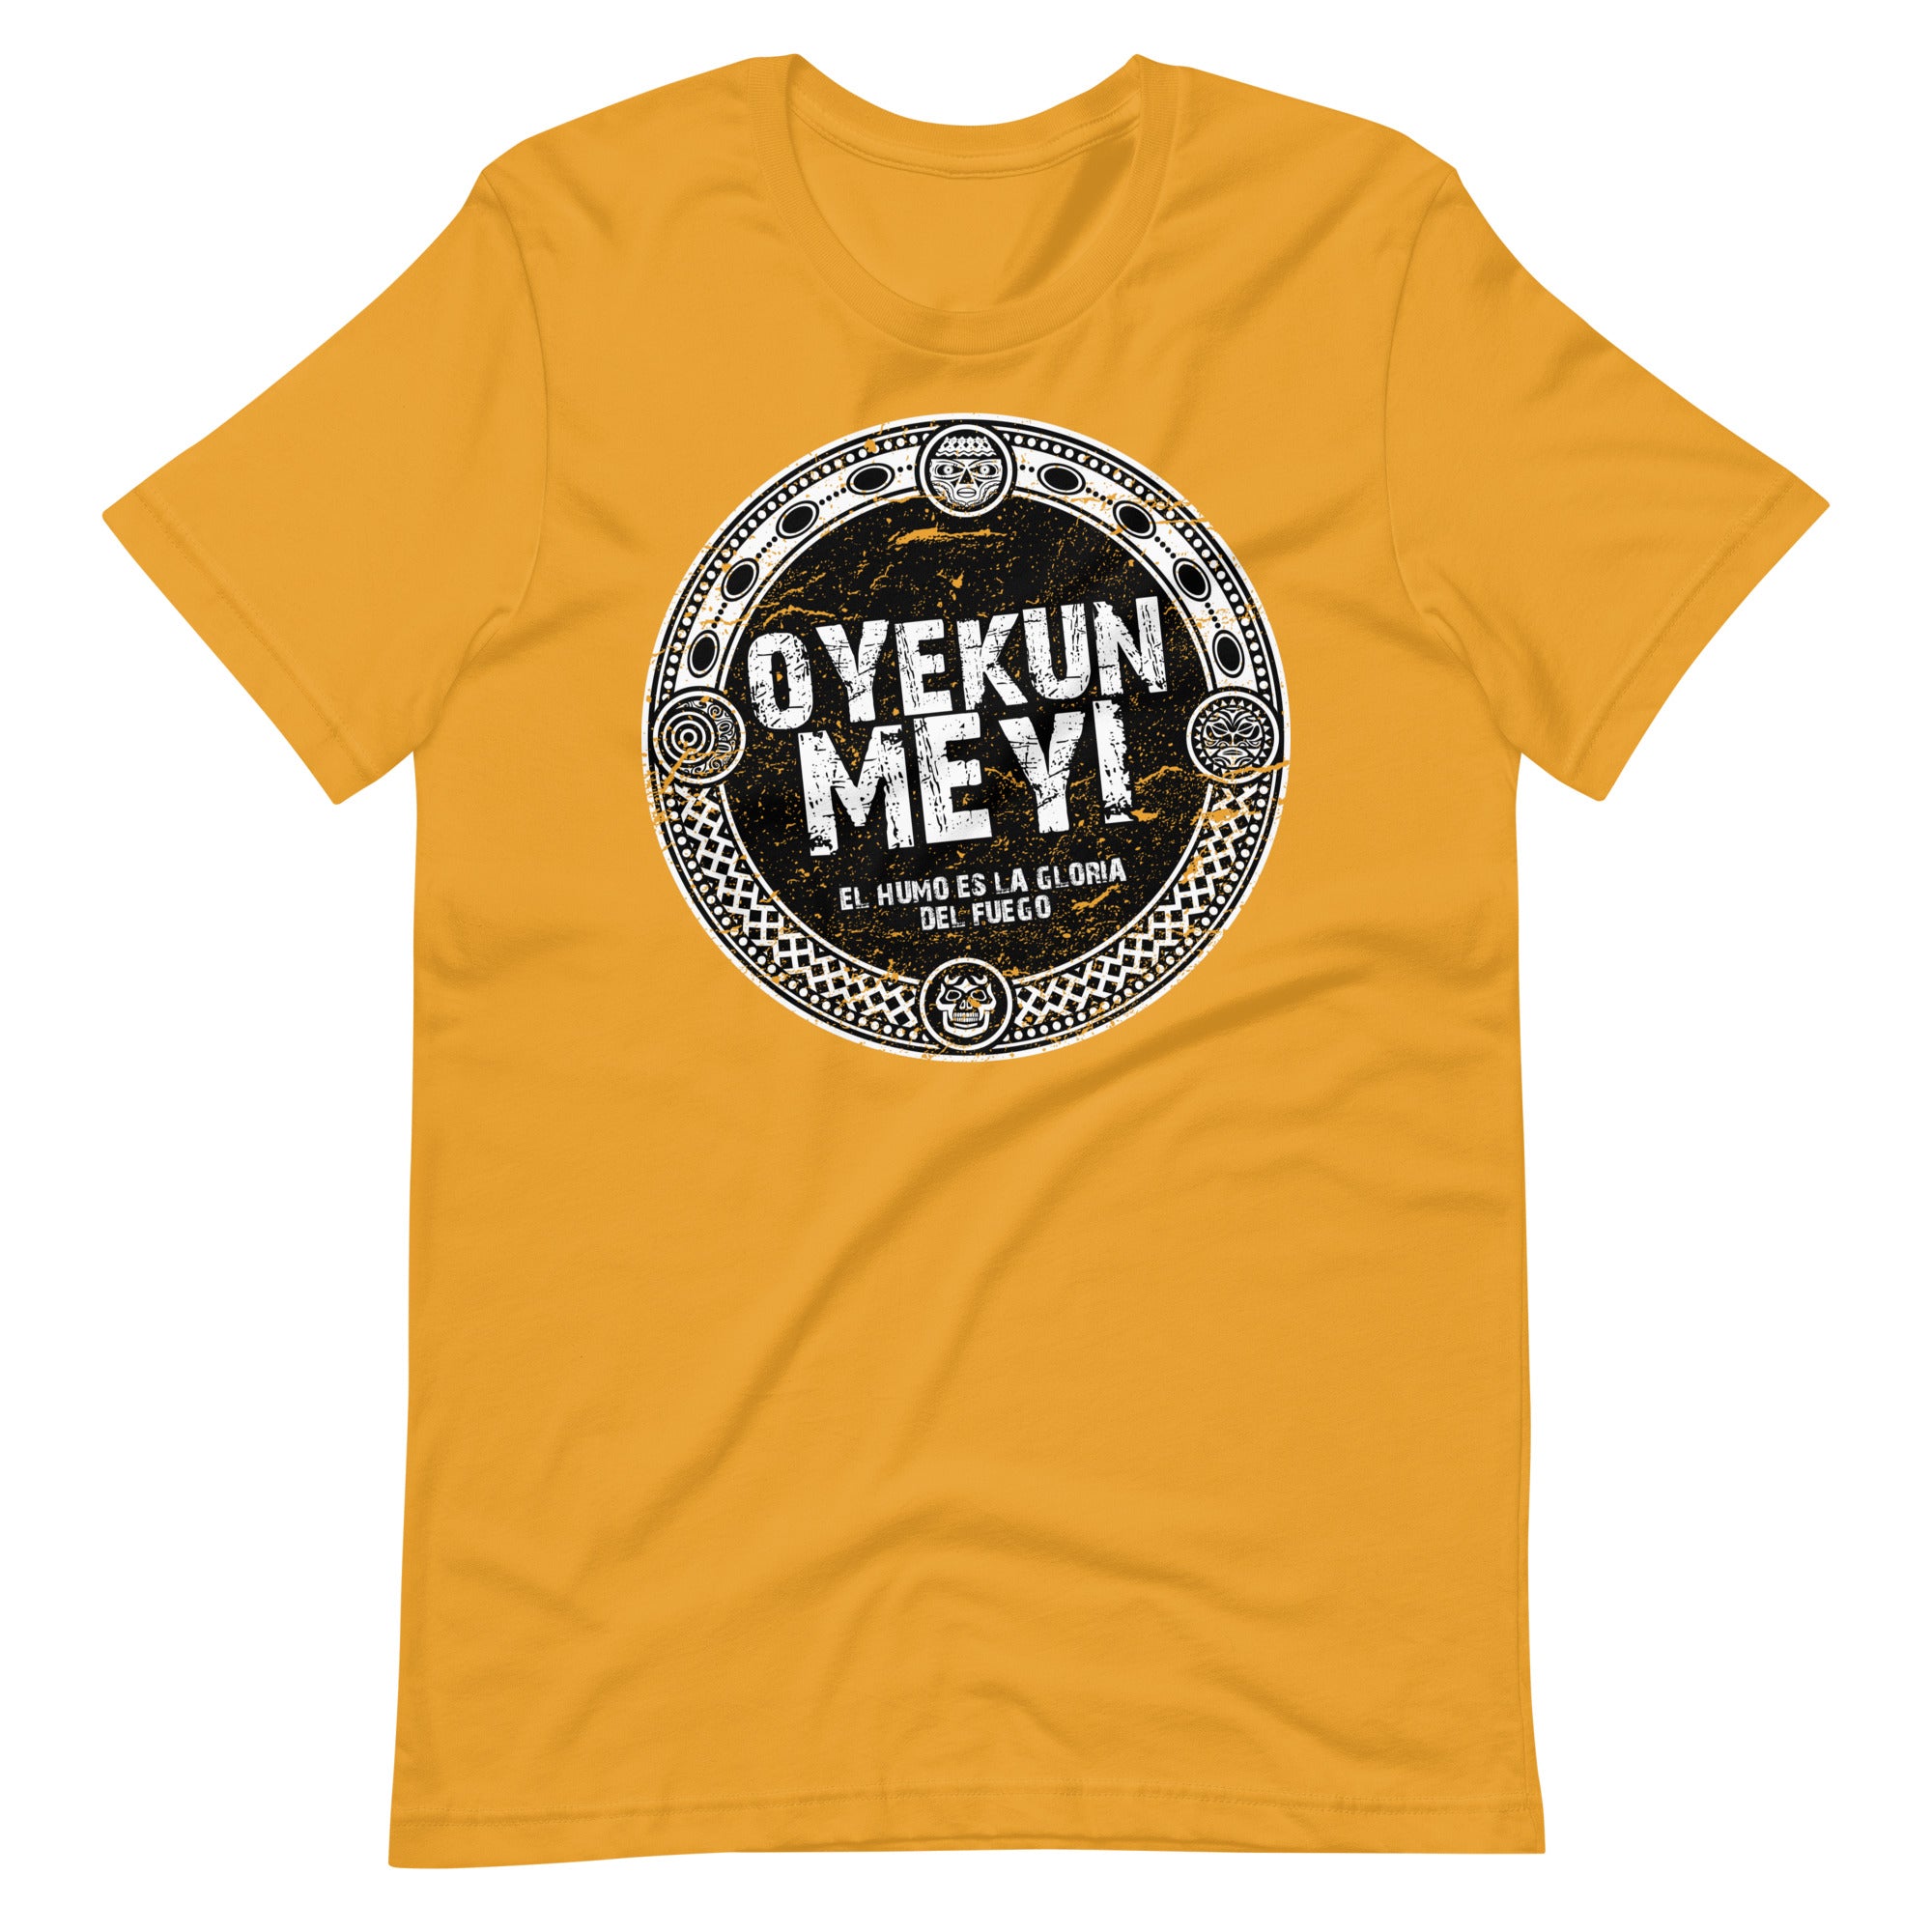 Oyekun Meyi | Camiseta de manga corta unisex